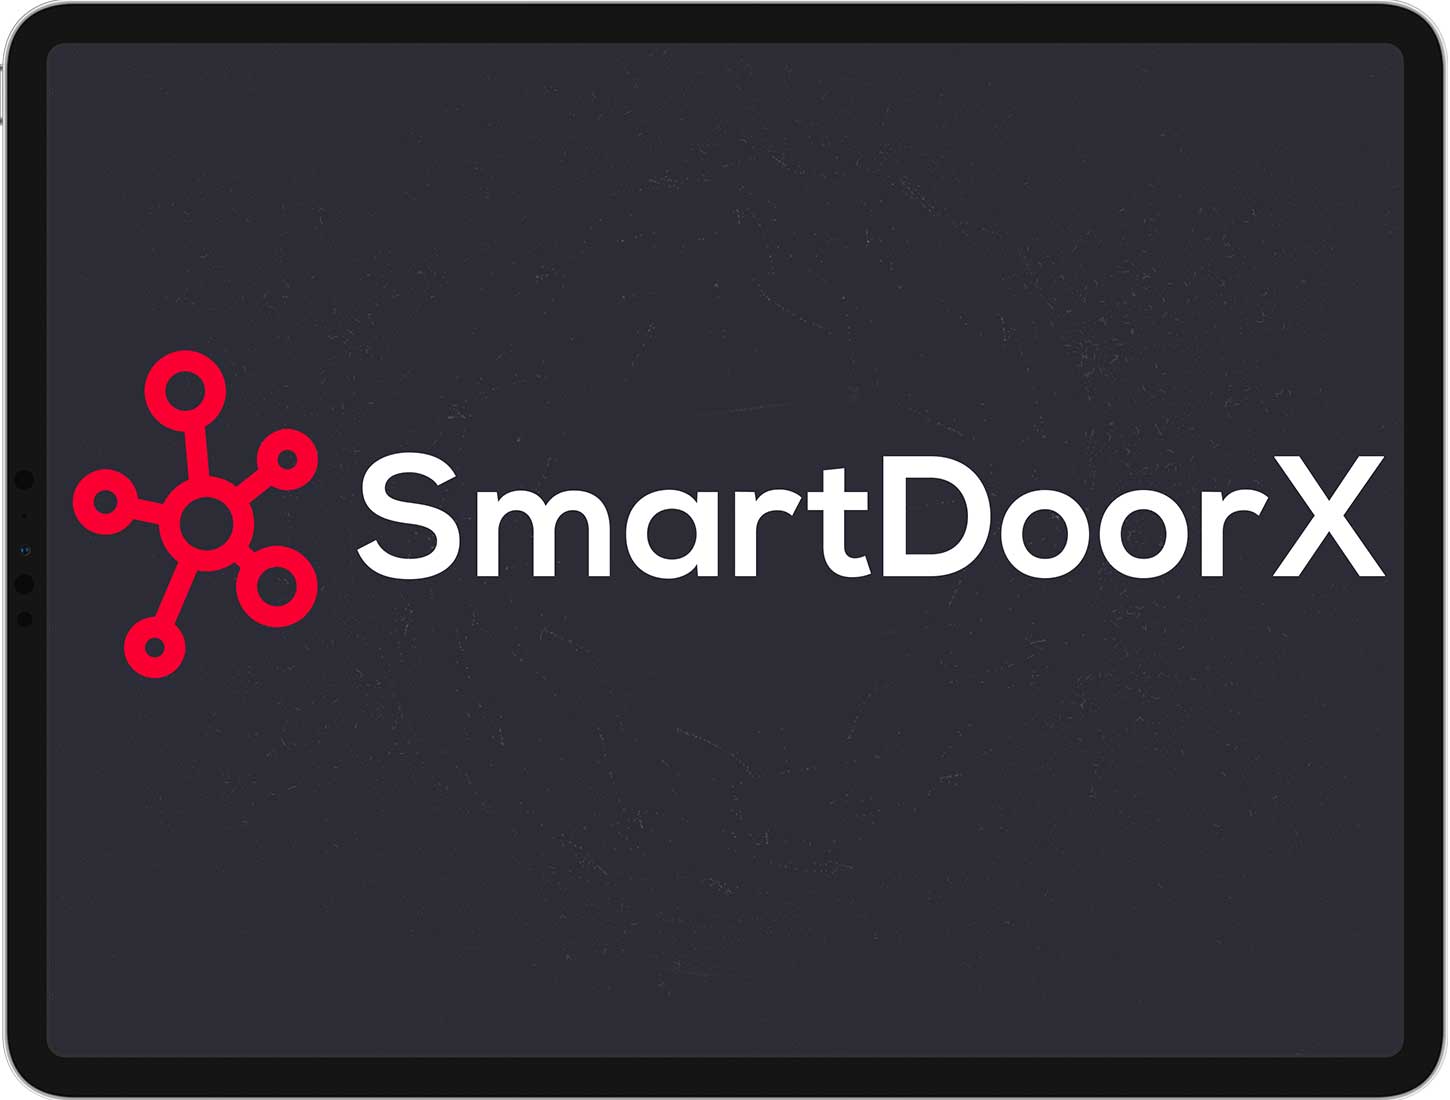 SmartDoorX